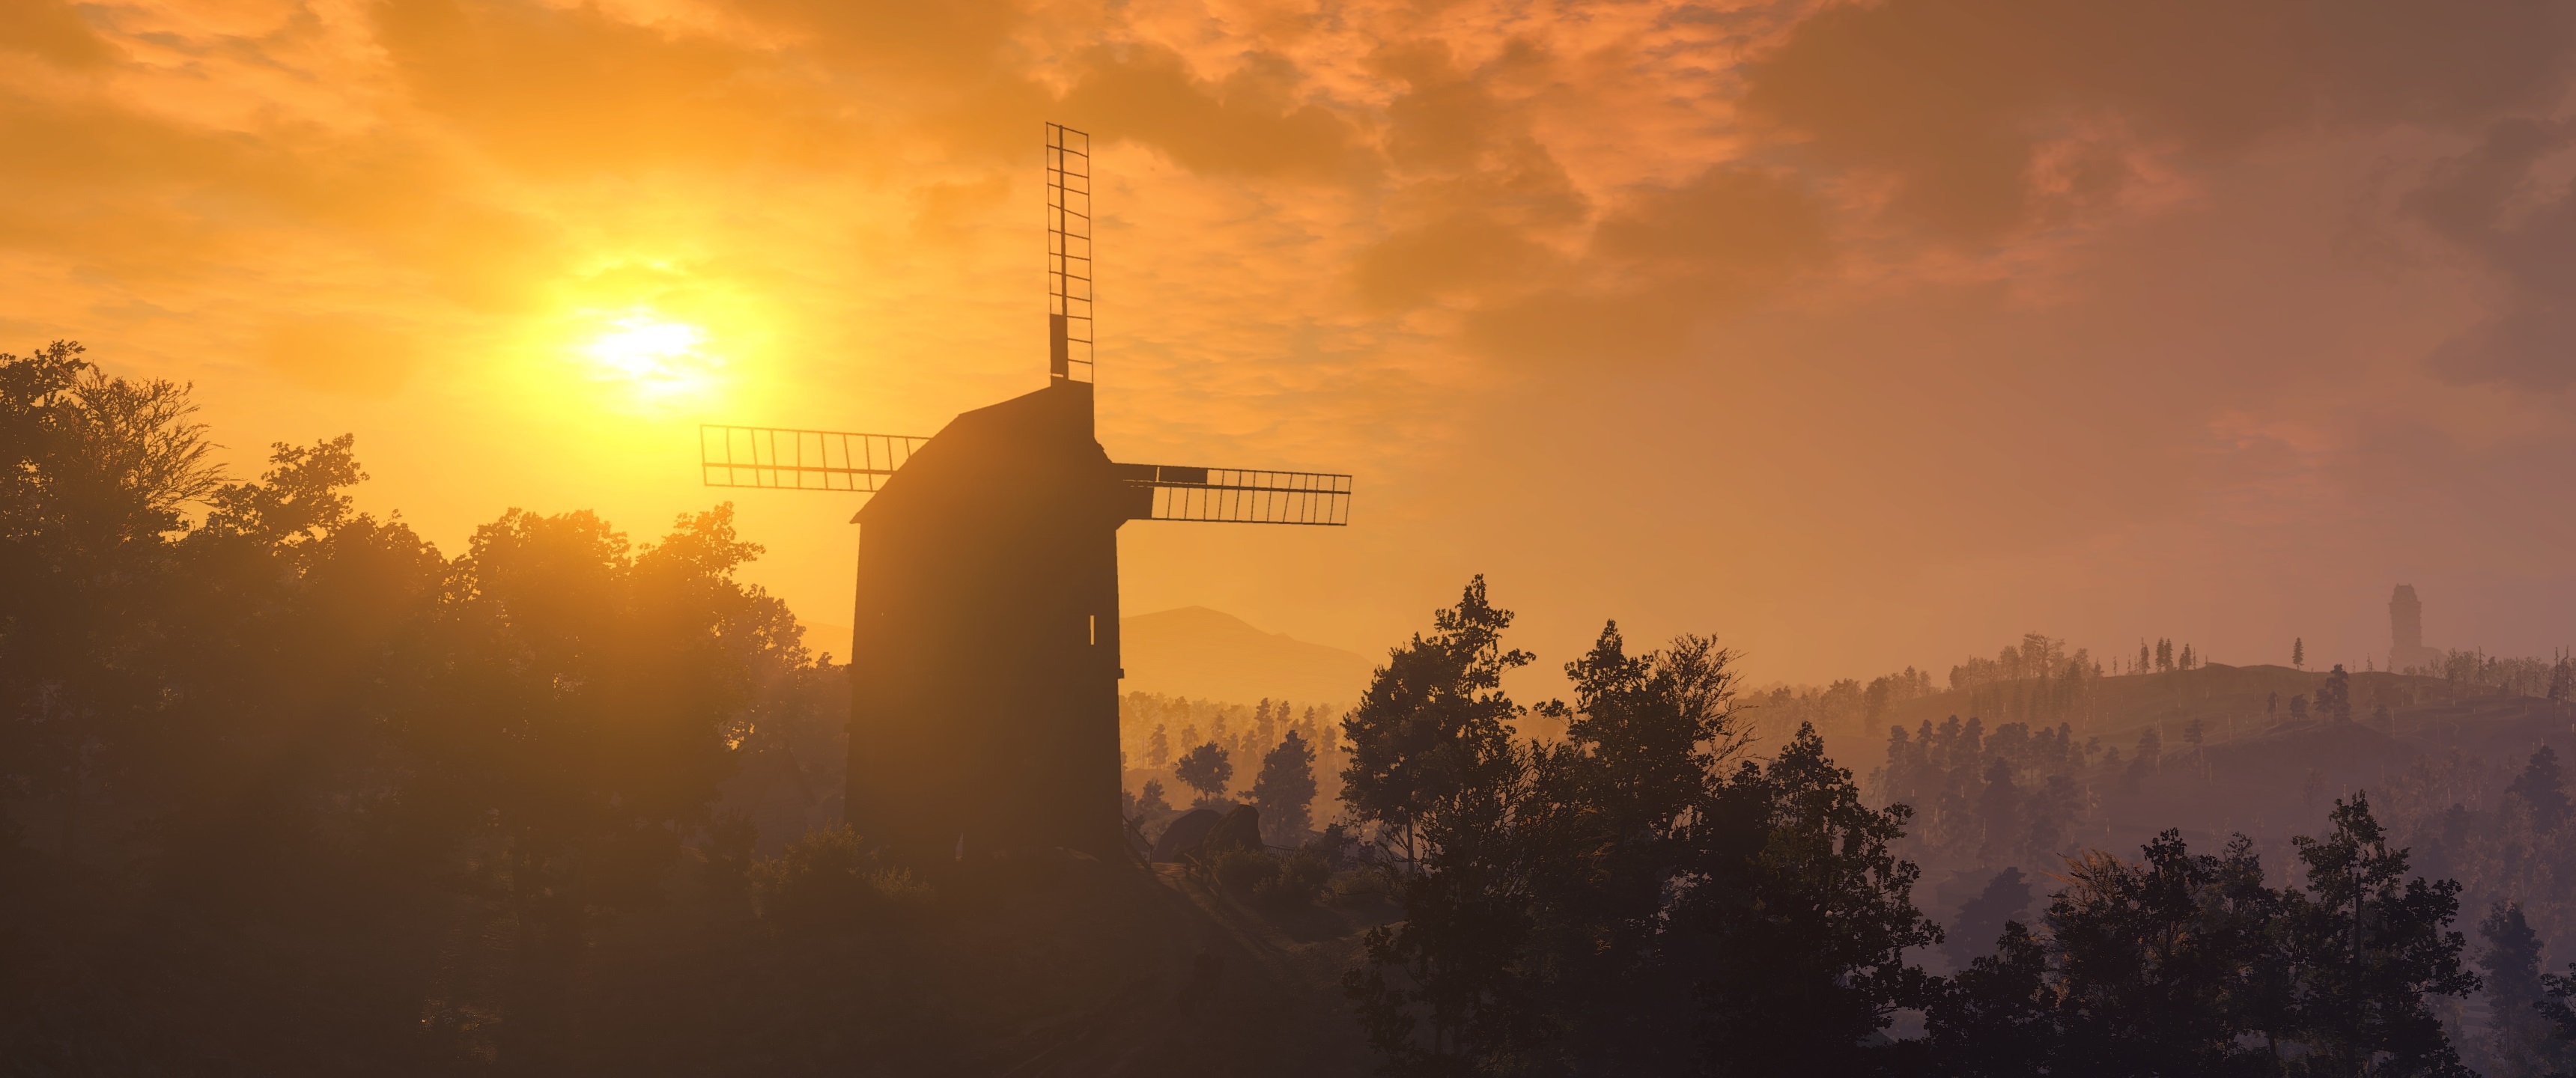 The Witcher 3 Wild Hunt Video Games Velen Sunset Screen Shot 3440x1440